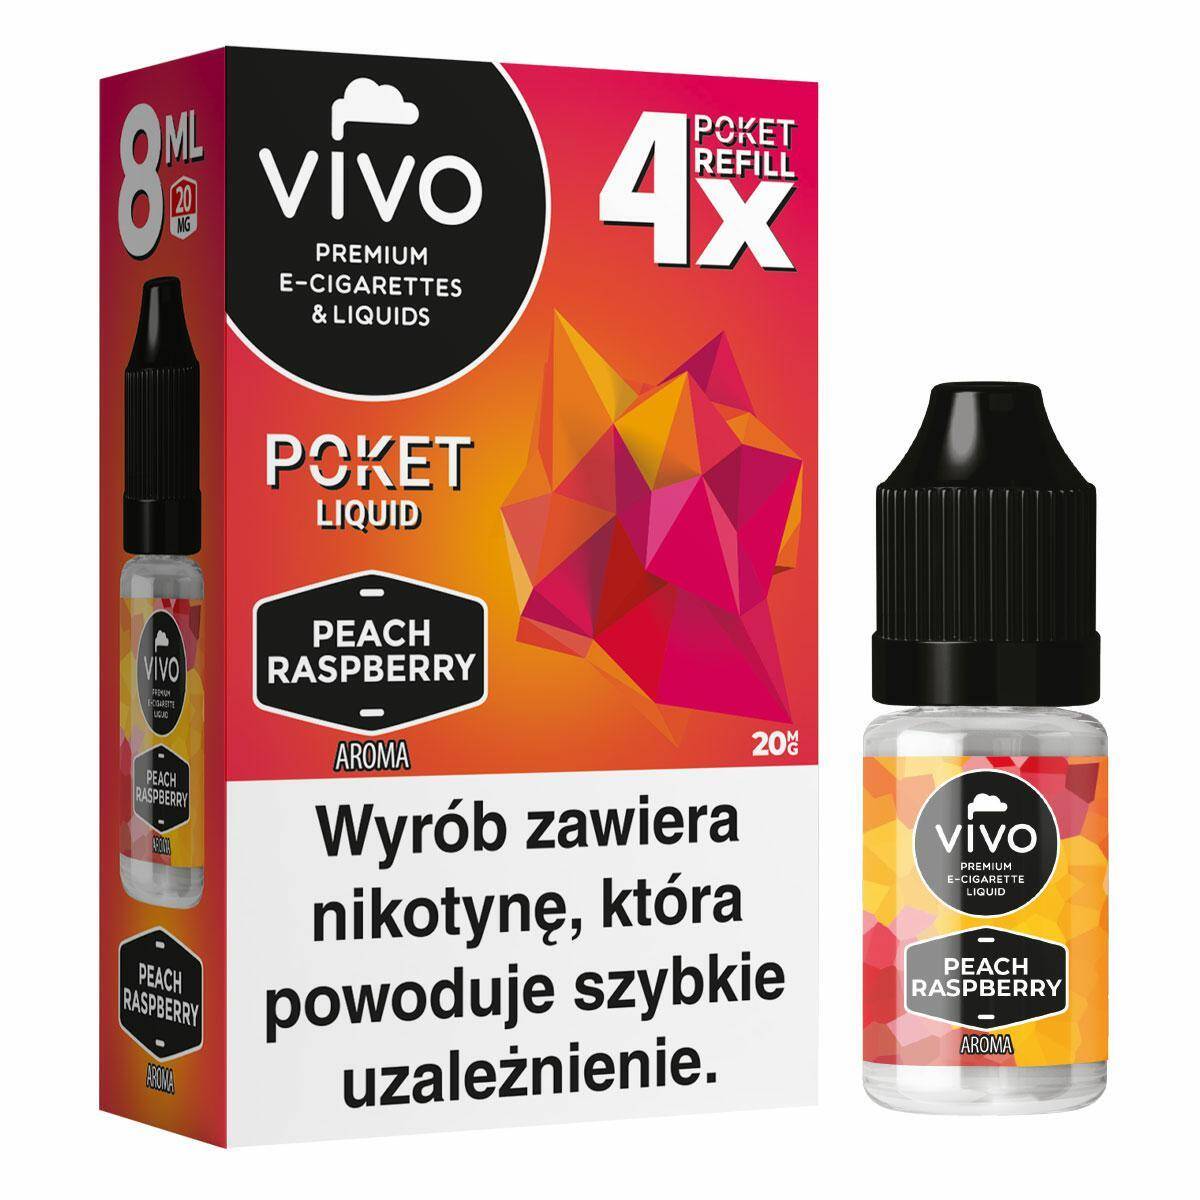 E-liquids VIVO POKET- Peach Raspberry x4/20mg/8ml